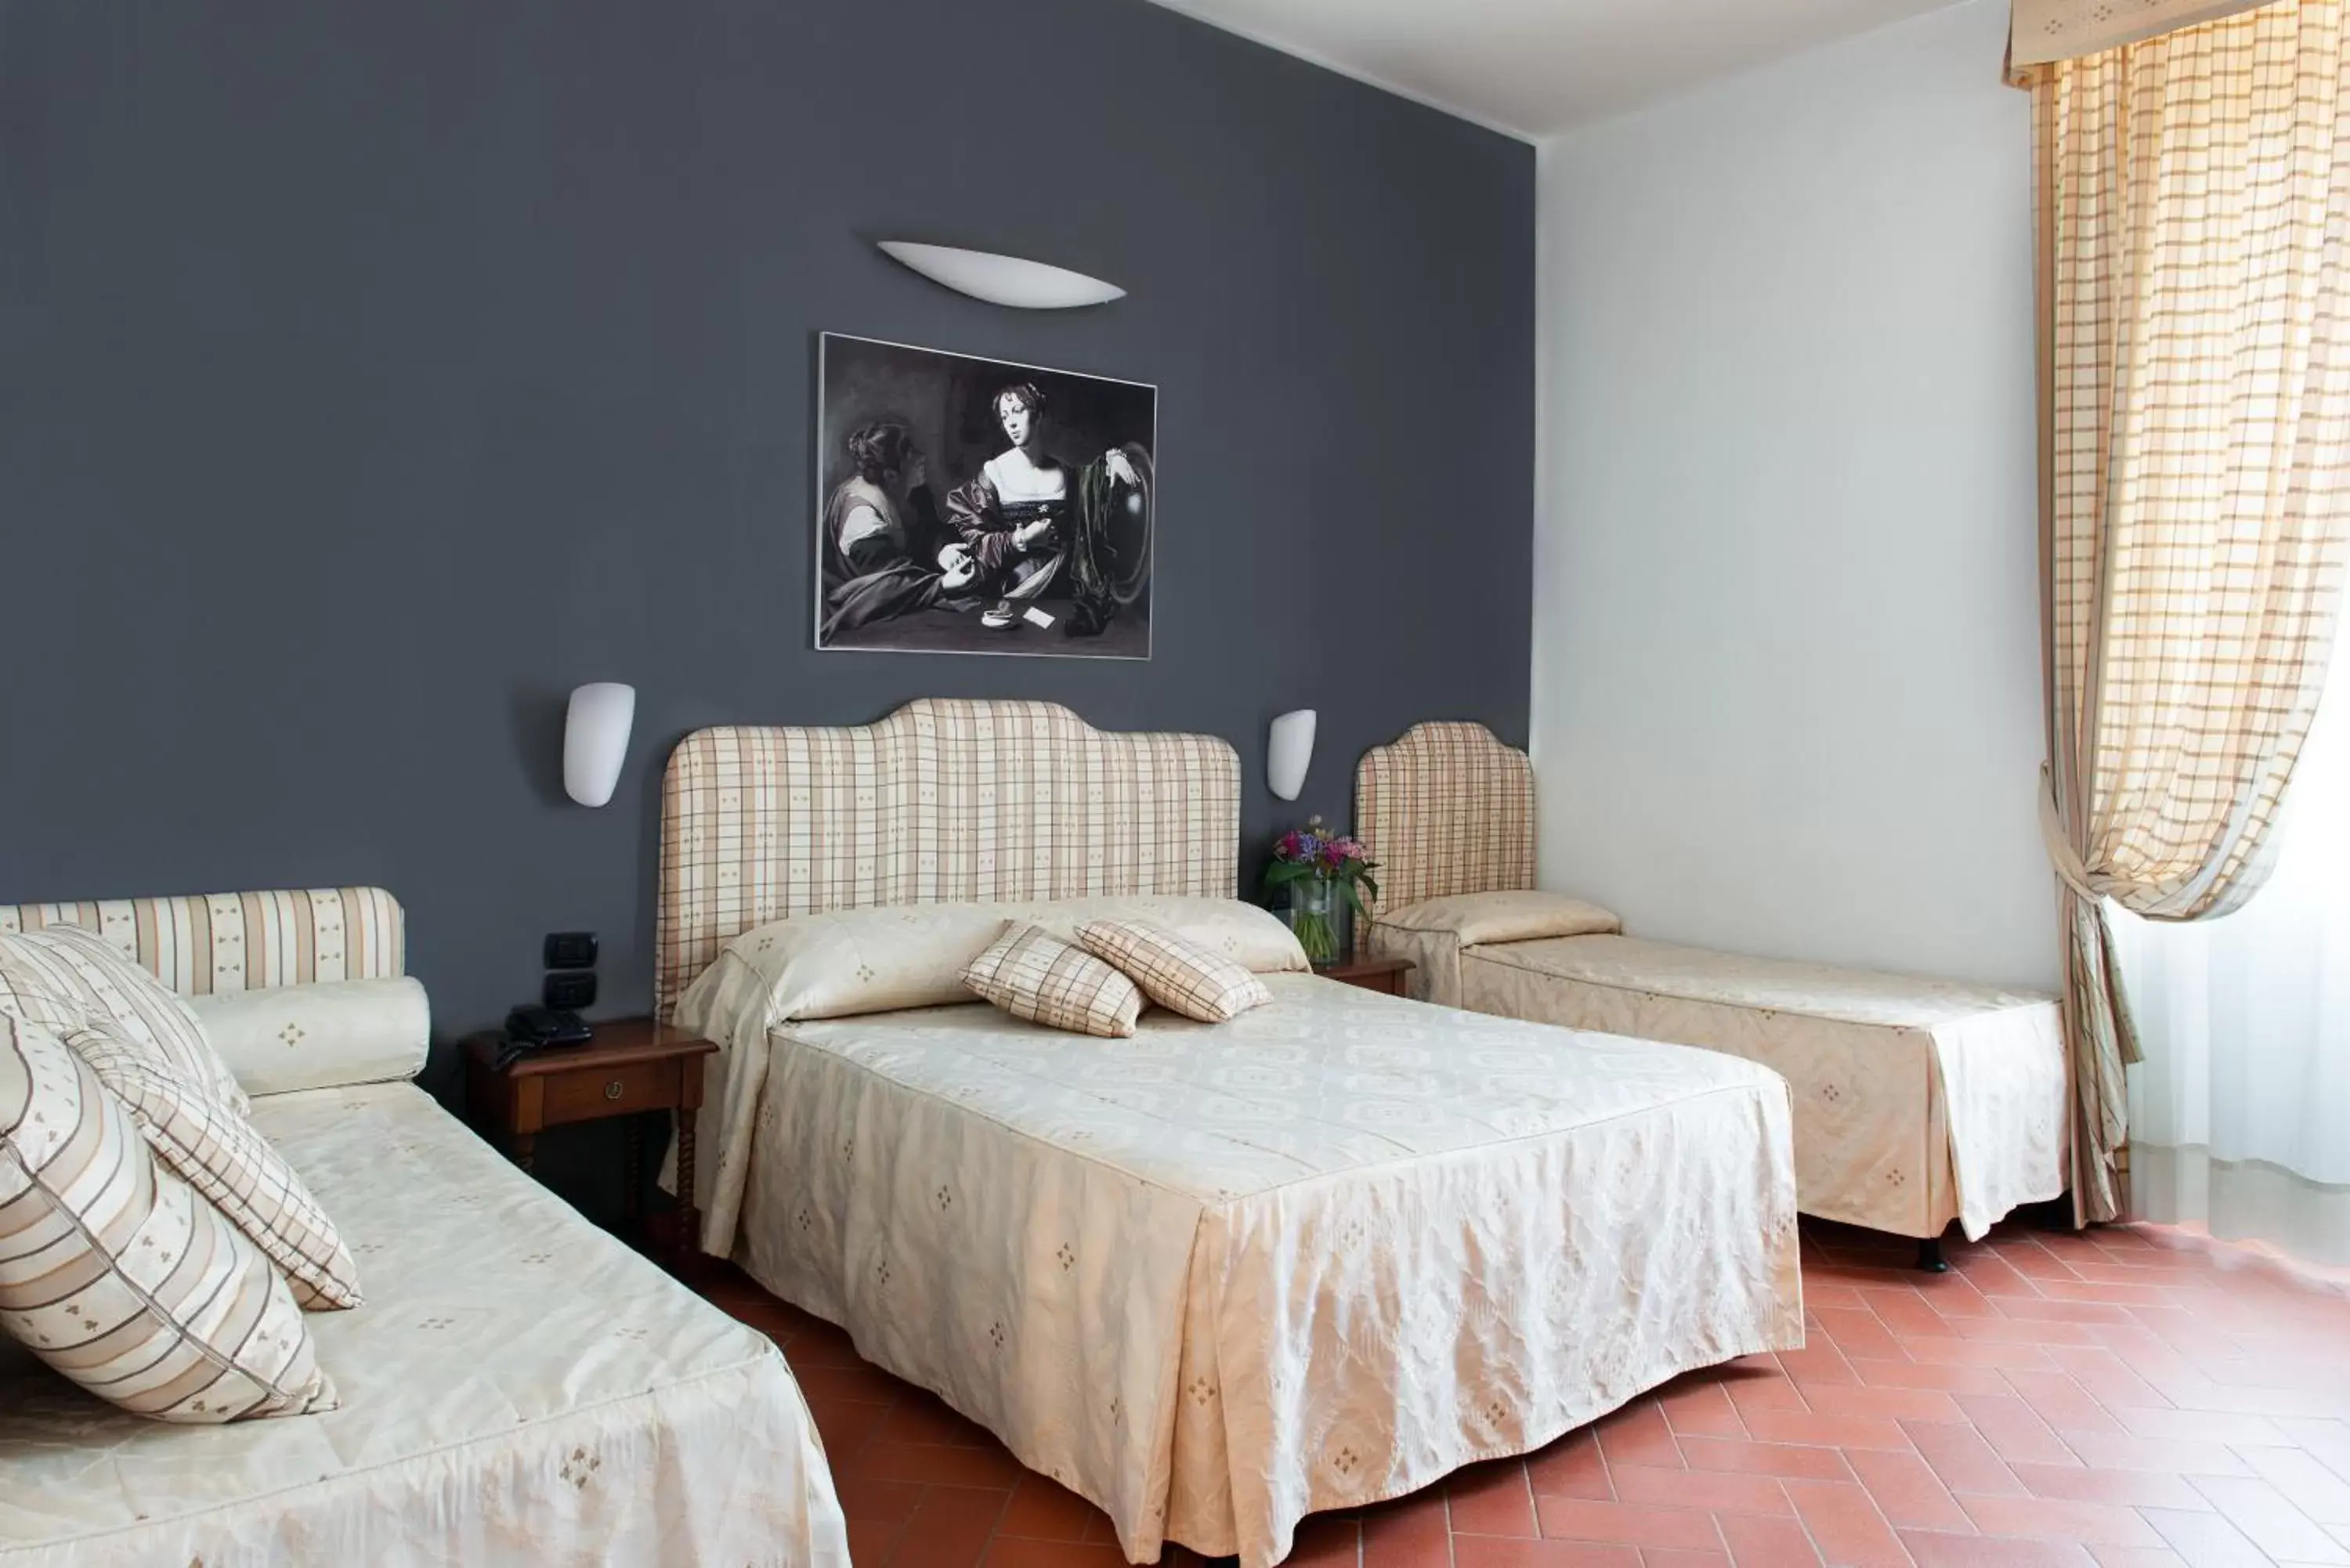 Bed, Room Photo in Hotel Caravaggio